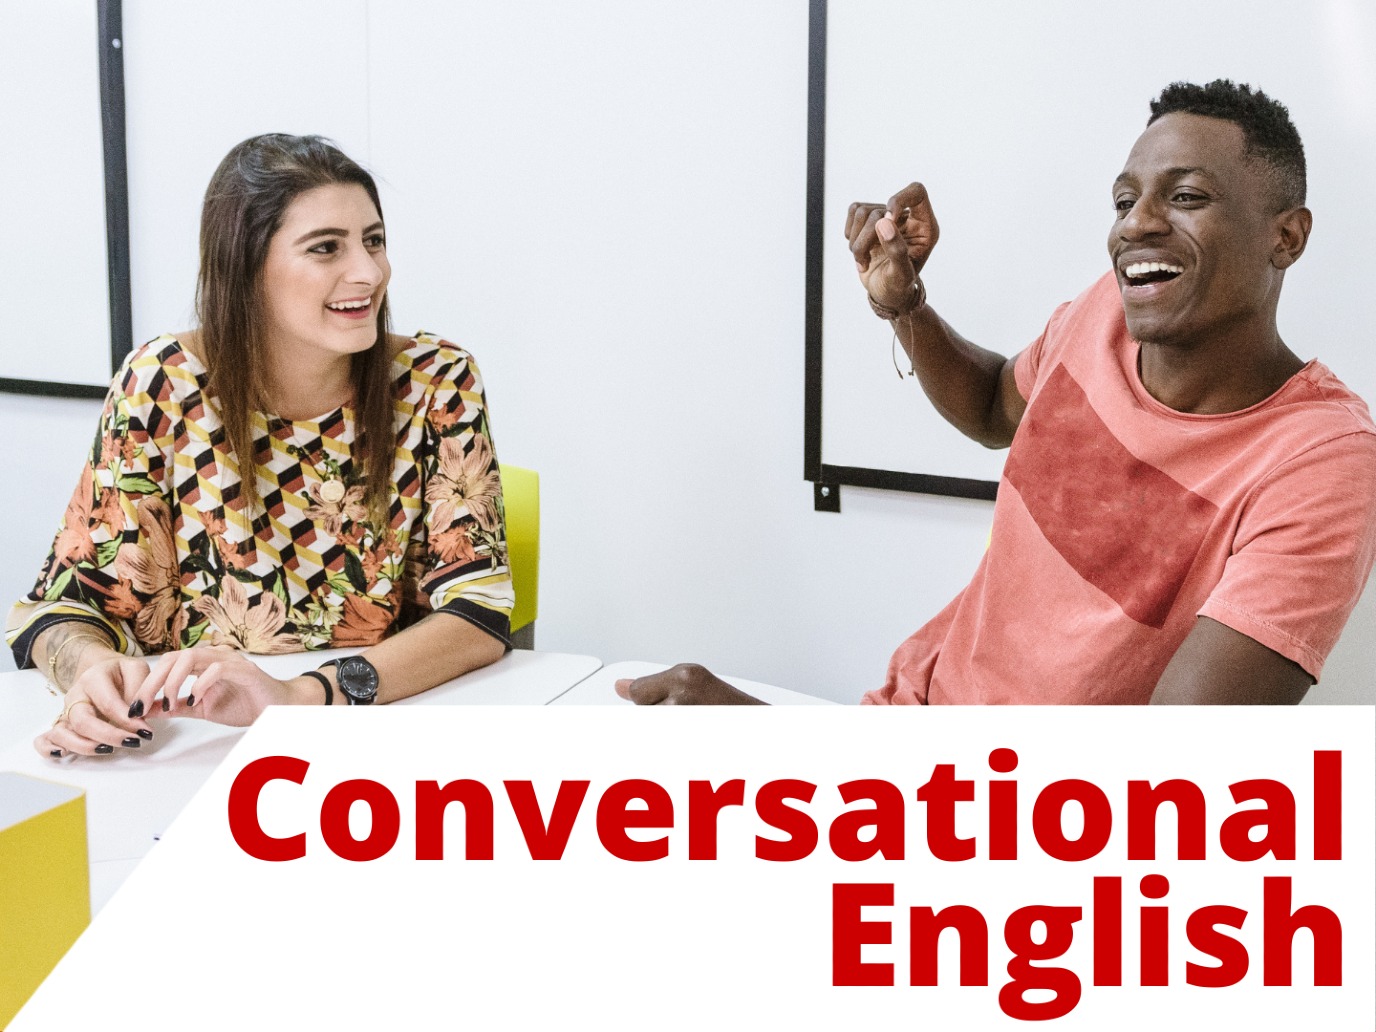 Conversational English